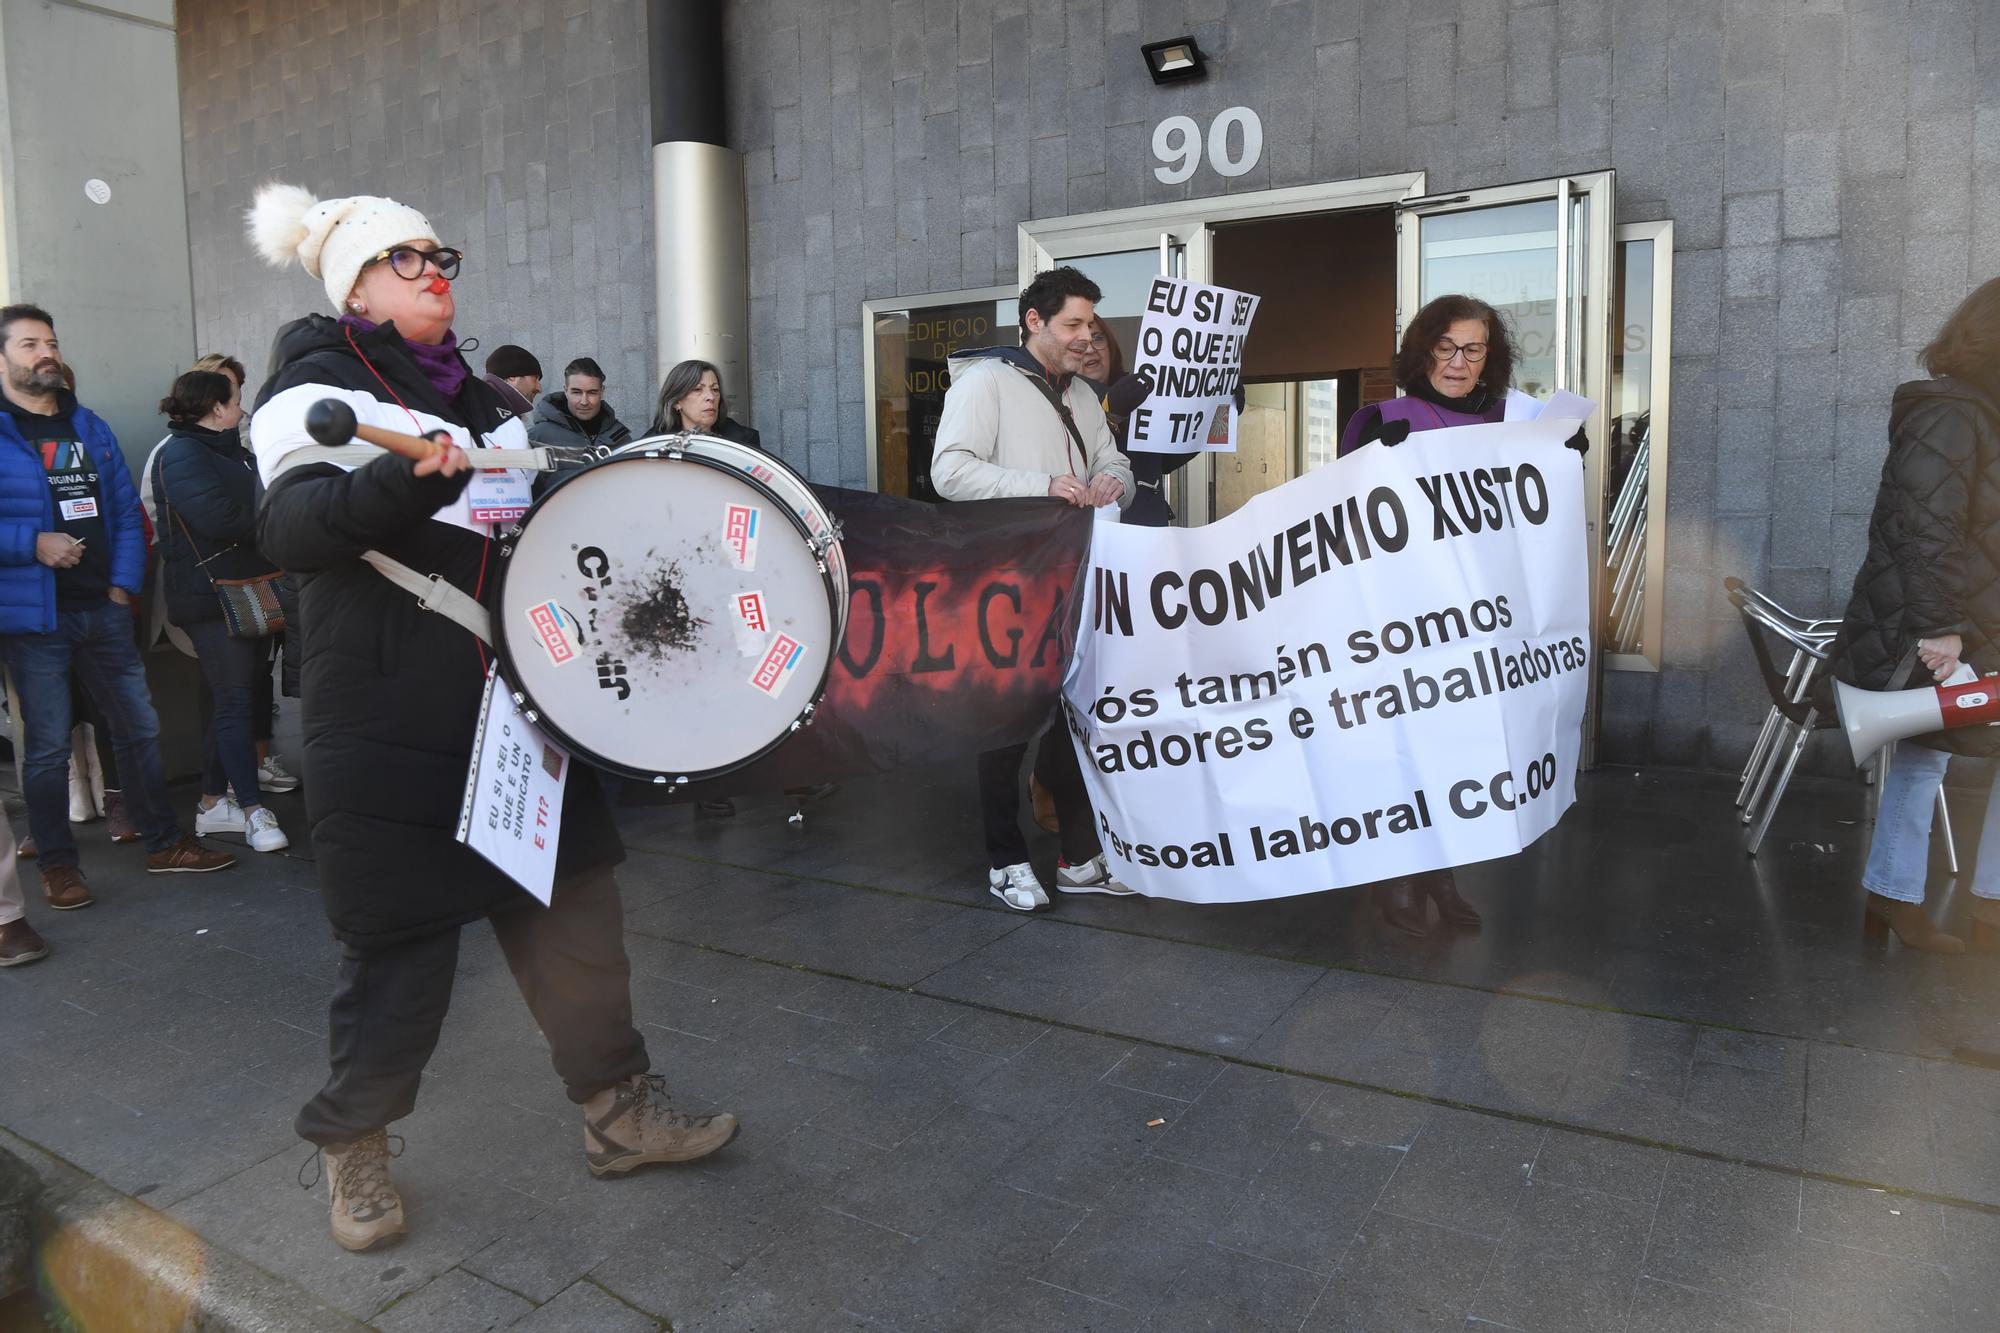 Huelga de trabajadores de CCOO: protesta en A Coruña